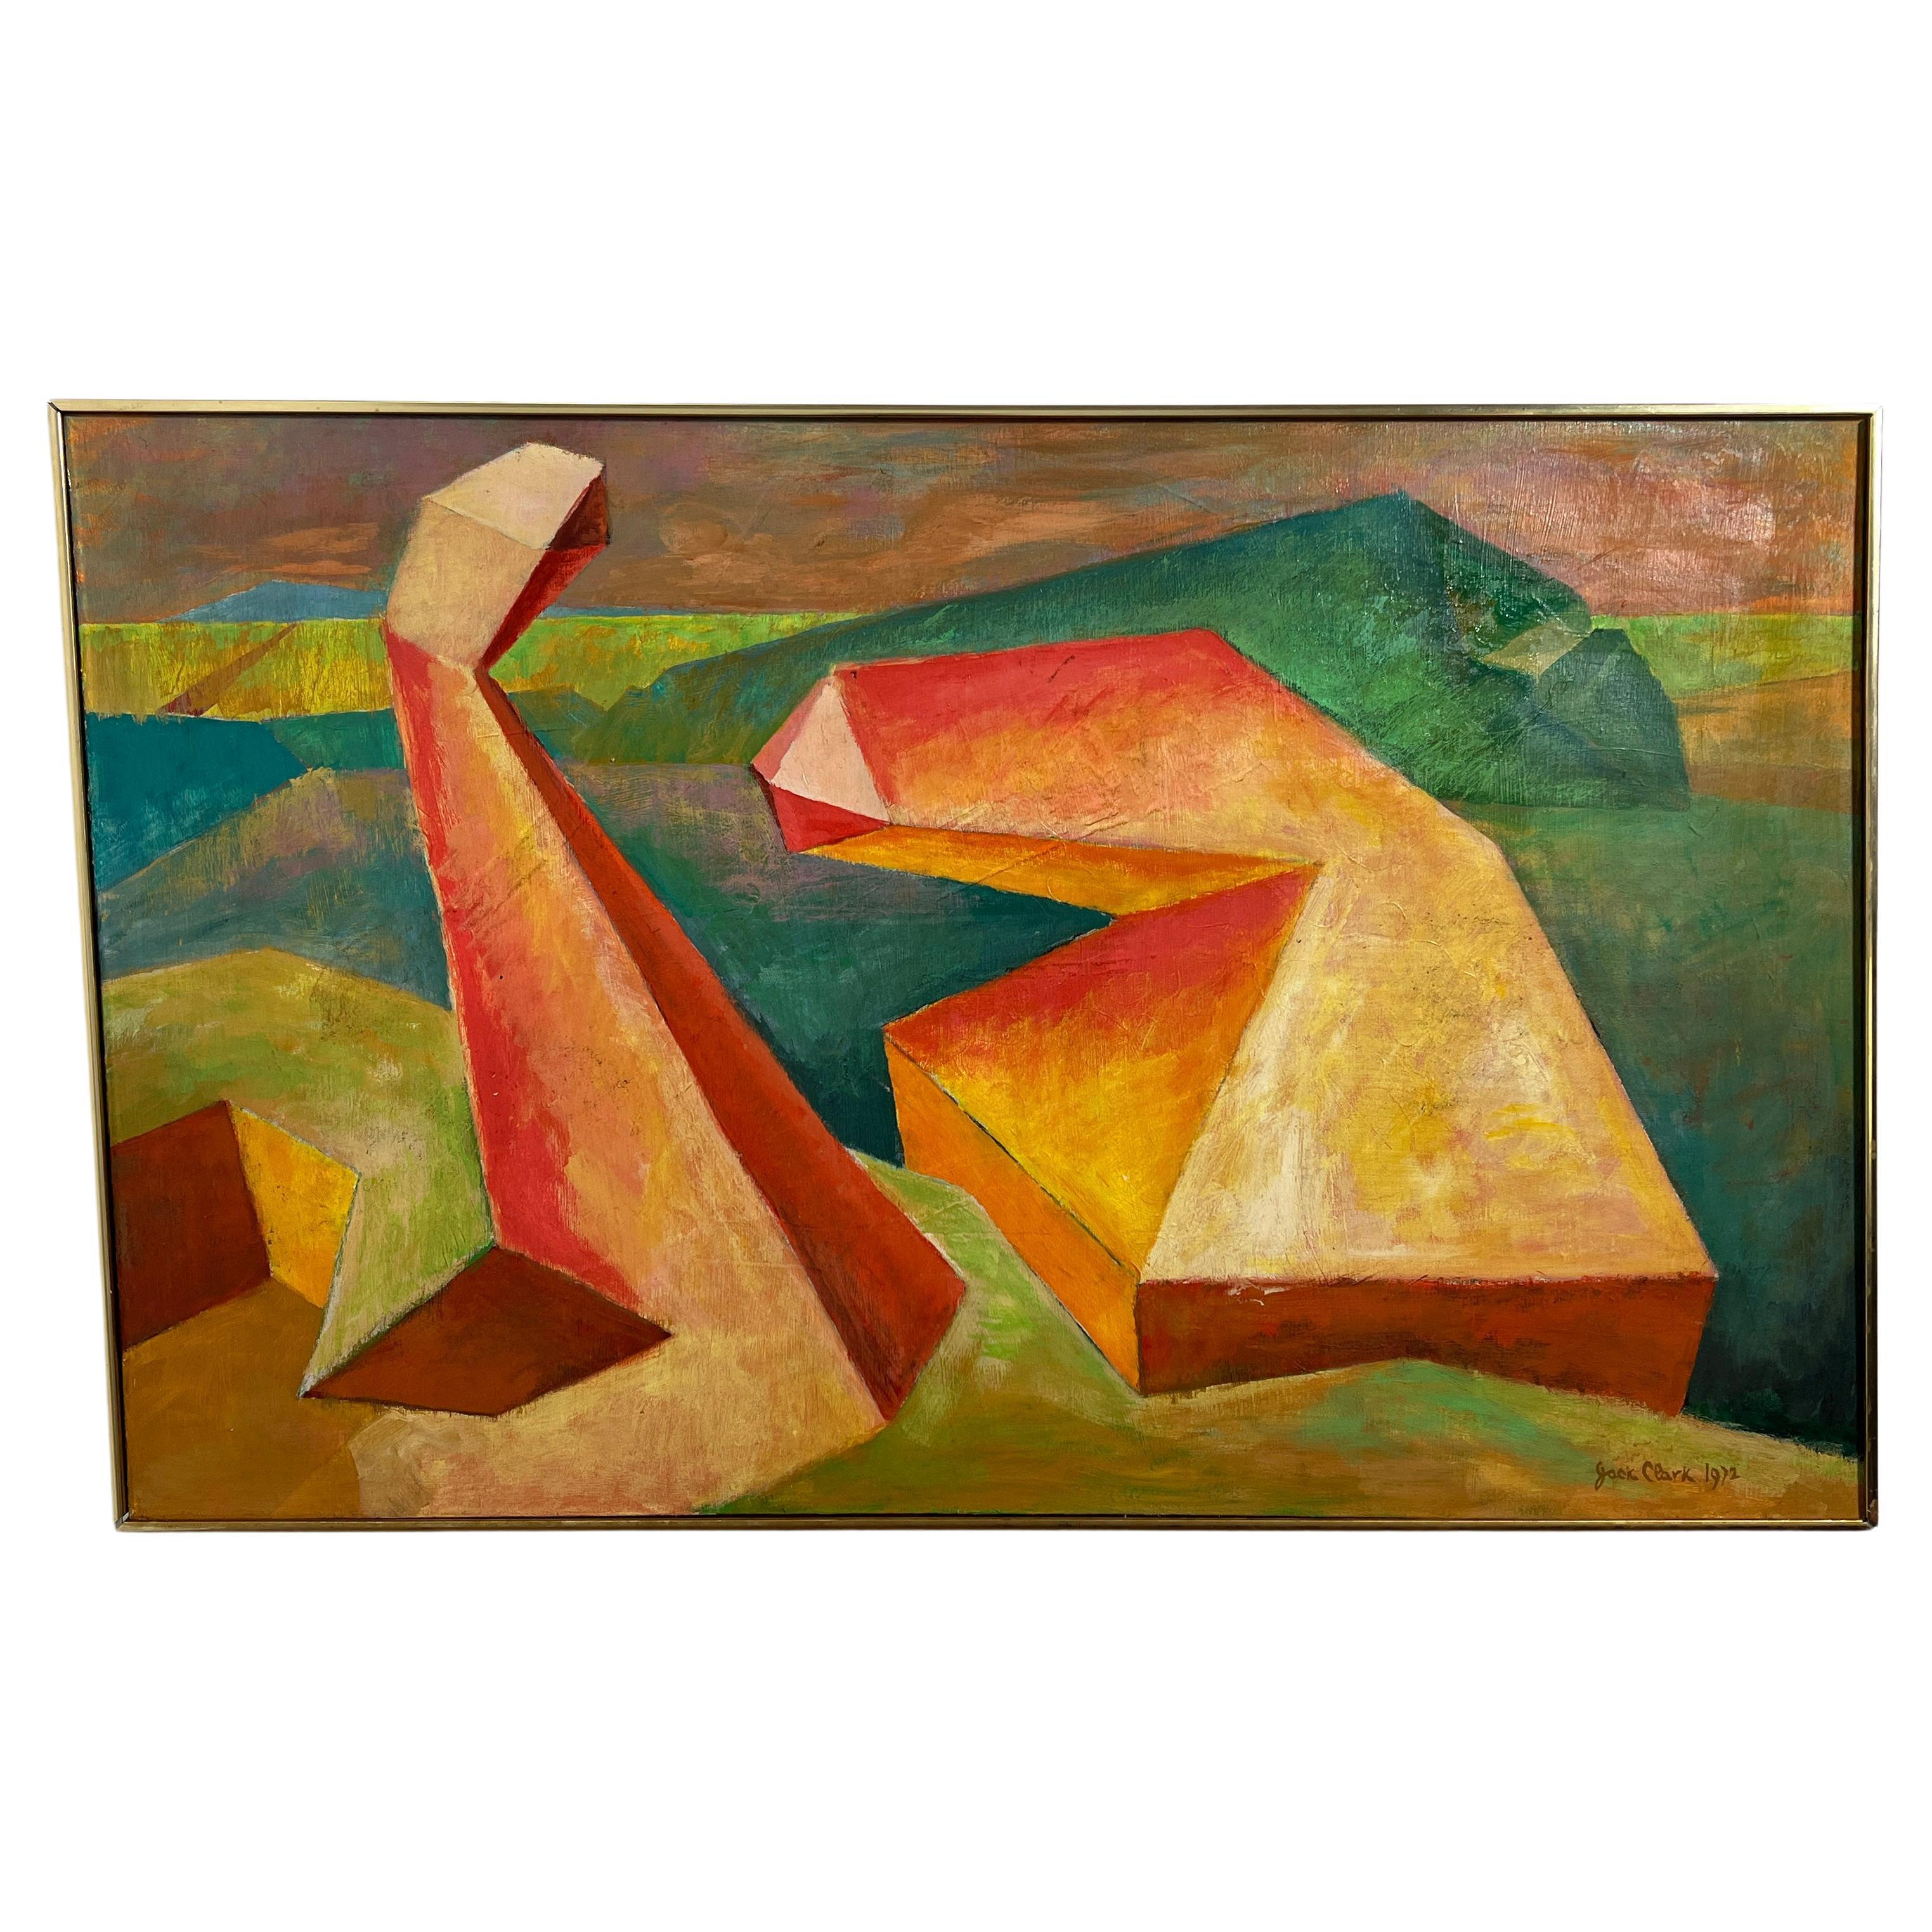 Large Cubist Landscape Abstract Painting Signed Jack Clark, d. 1972